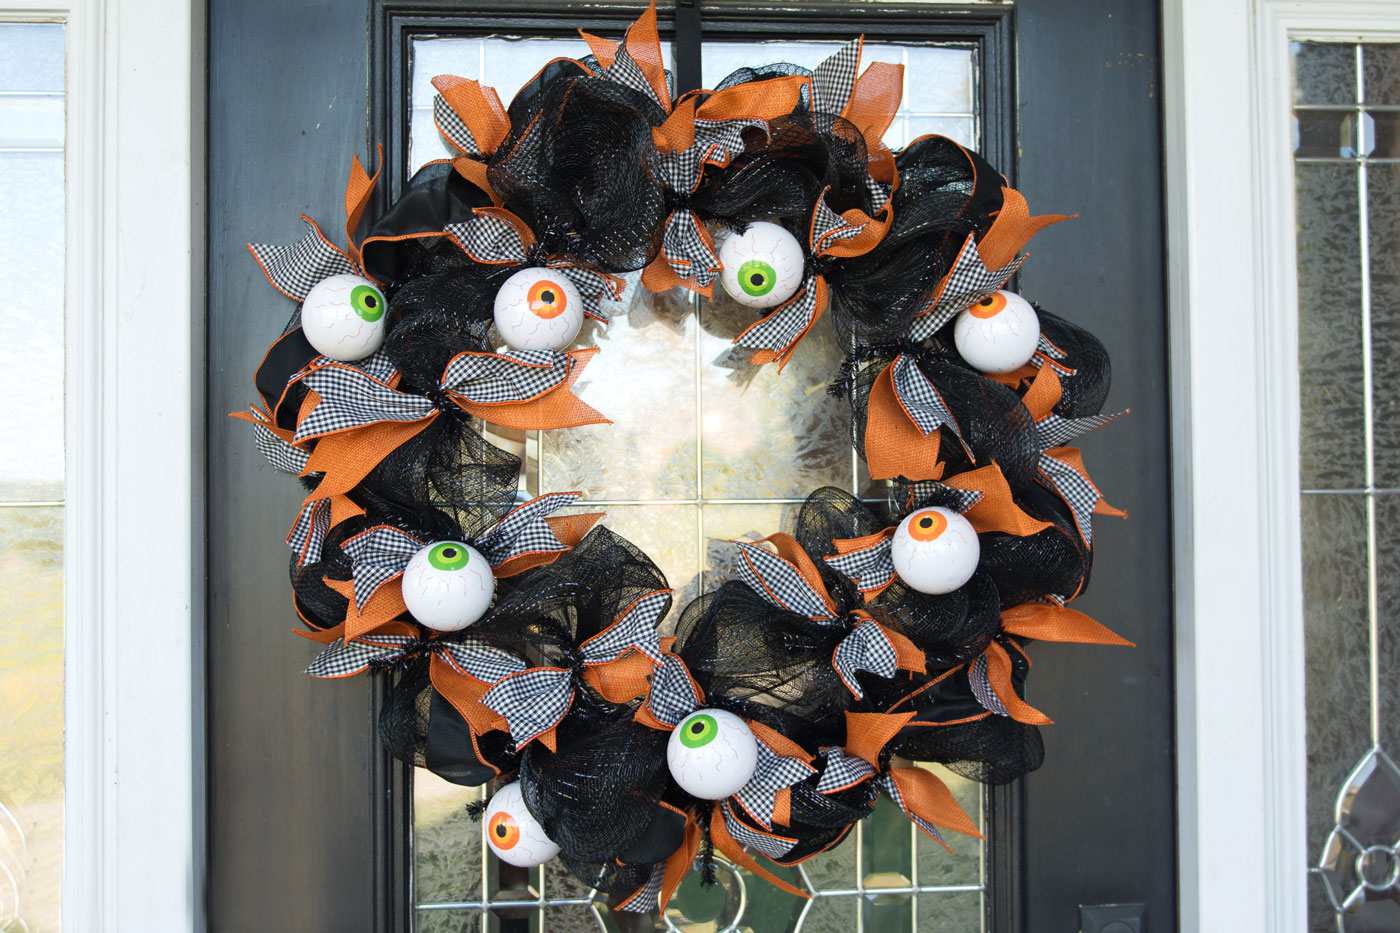 Wreath Halloween Decorations